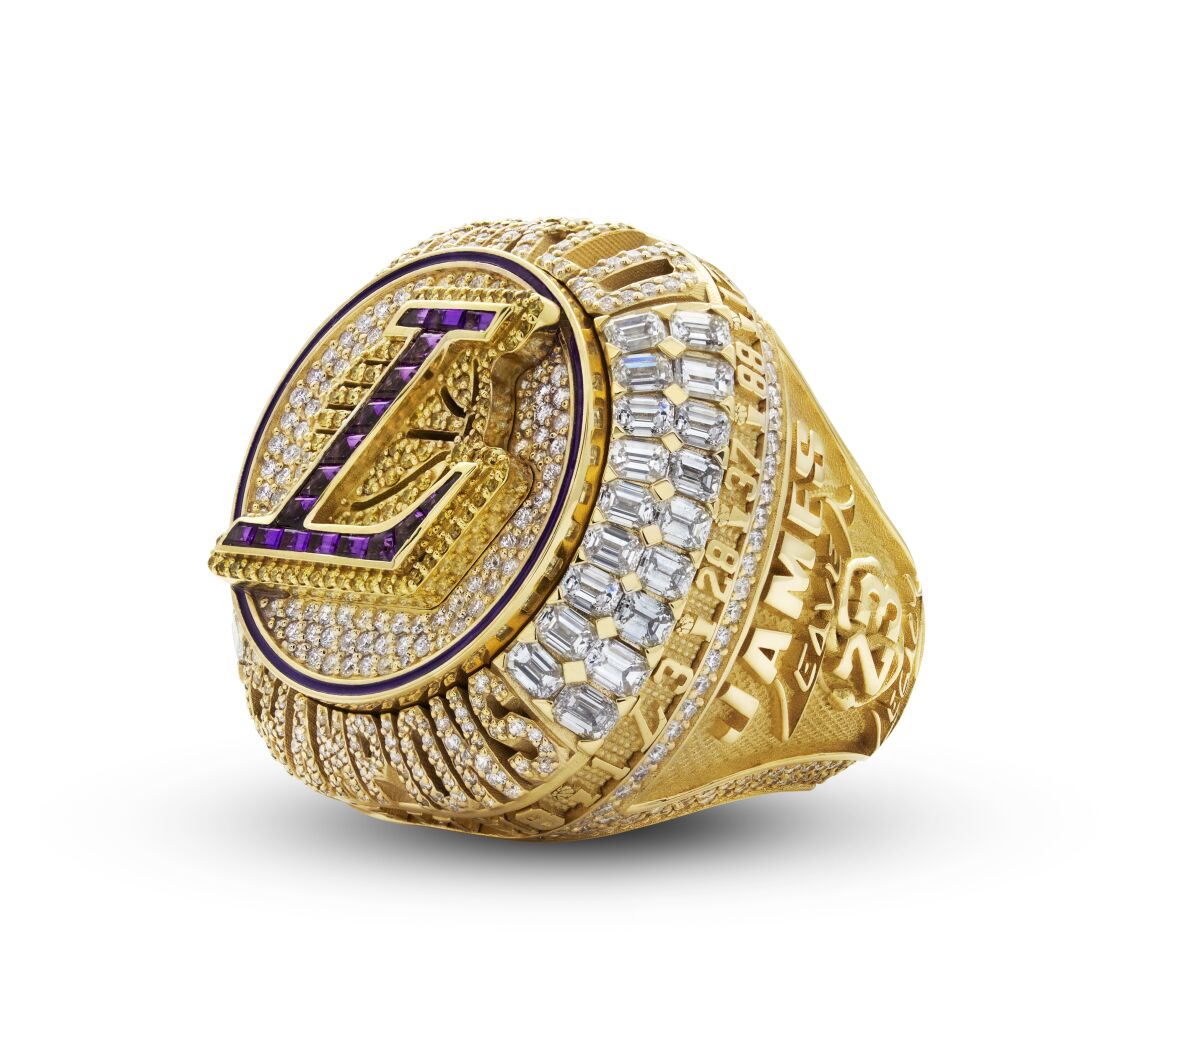 The Lakers' 2020 NBA championship rings.